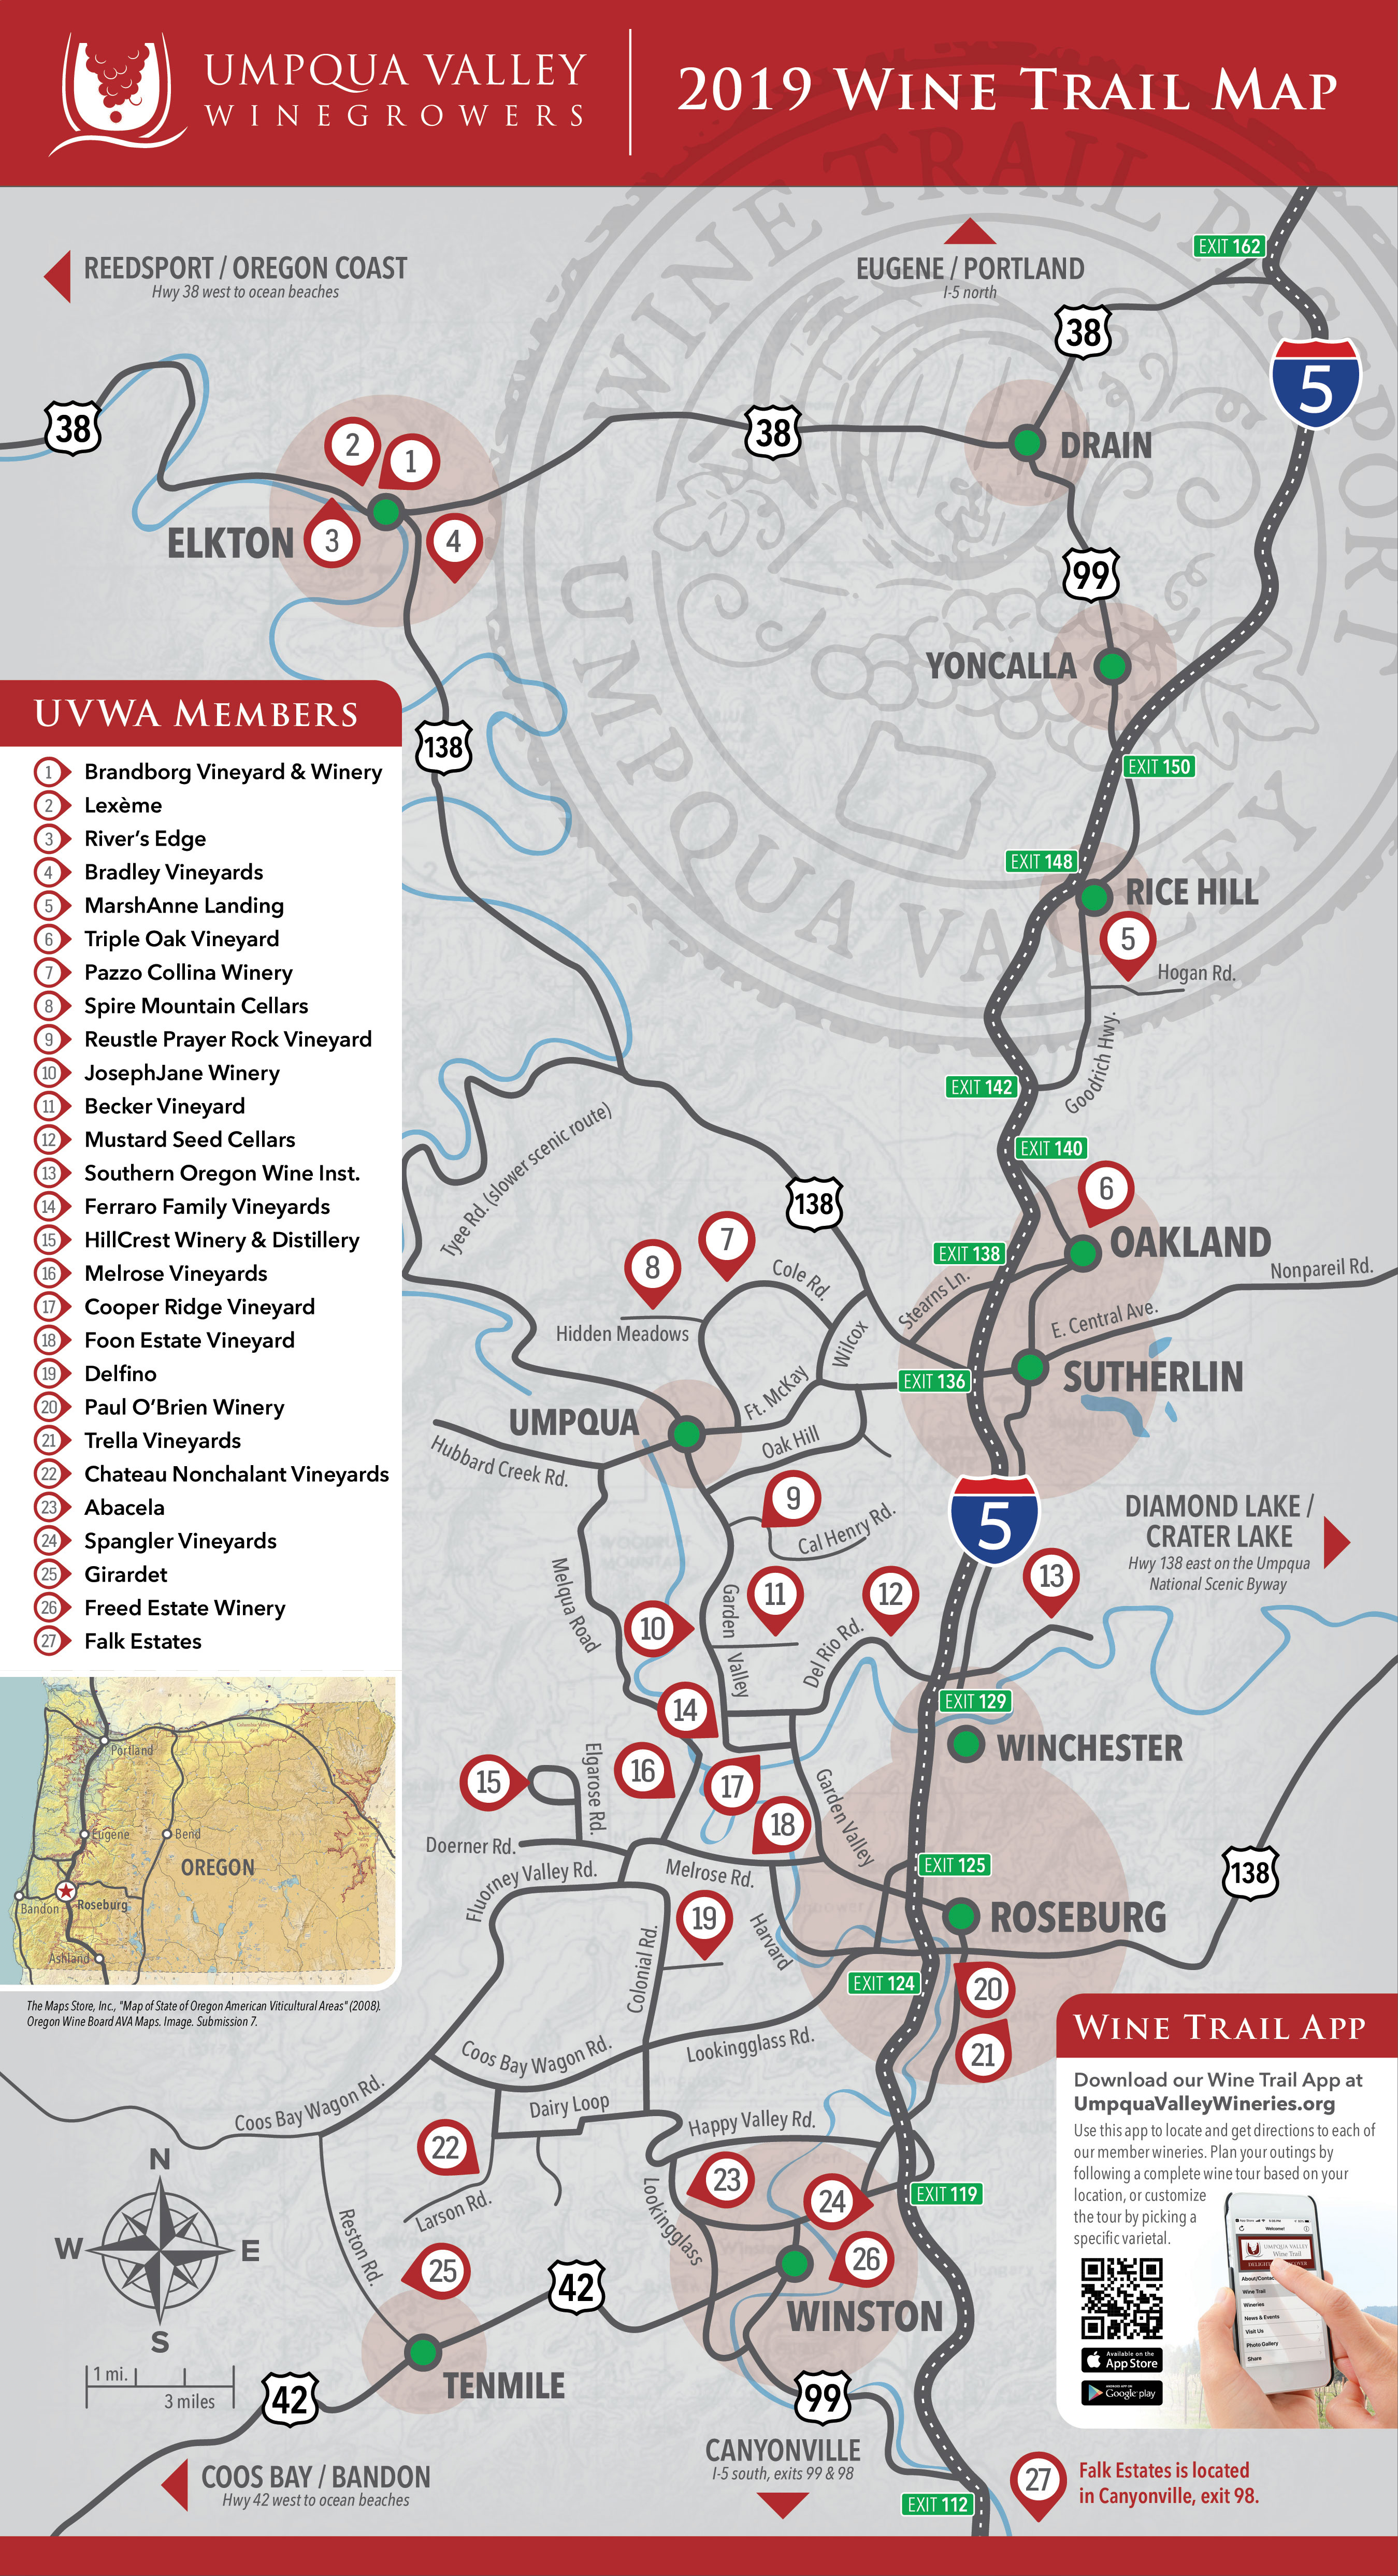 Umpqua Valley Winegrowers Wine Tour Map